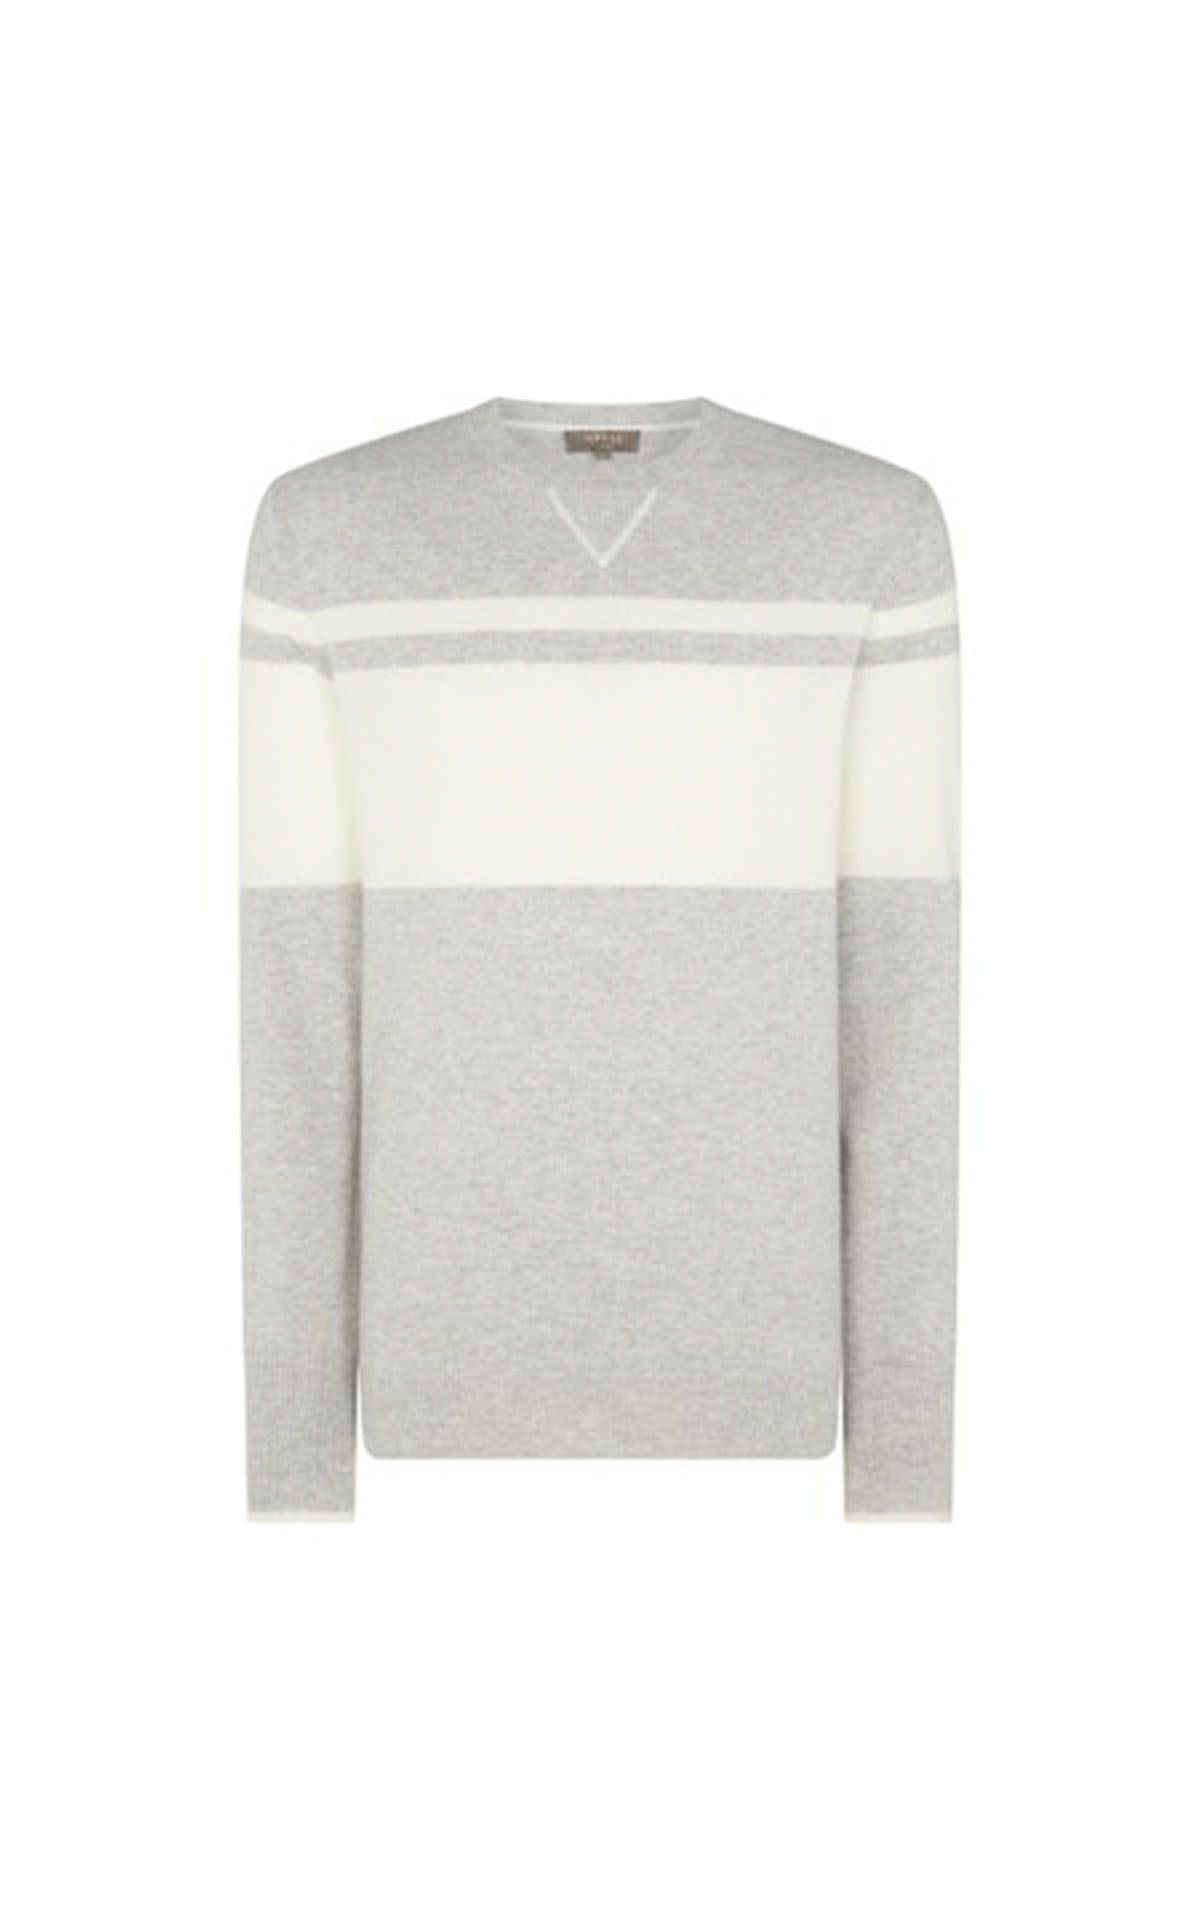 N.Peal Striped sweatshirt fume grey from Bicester Village